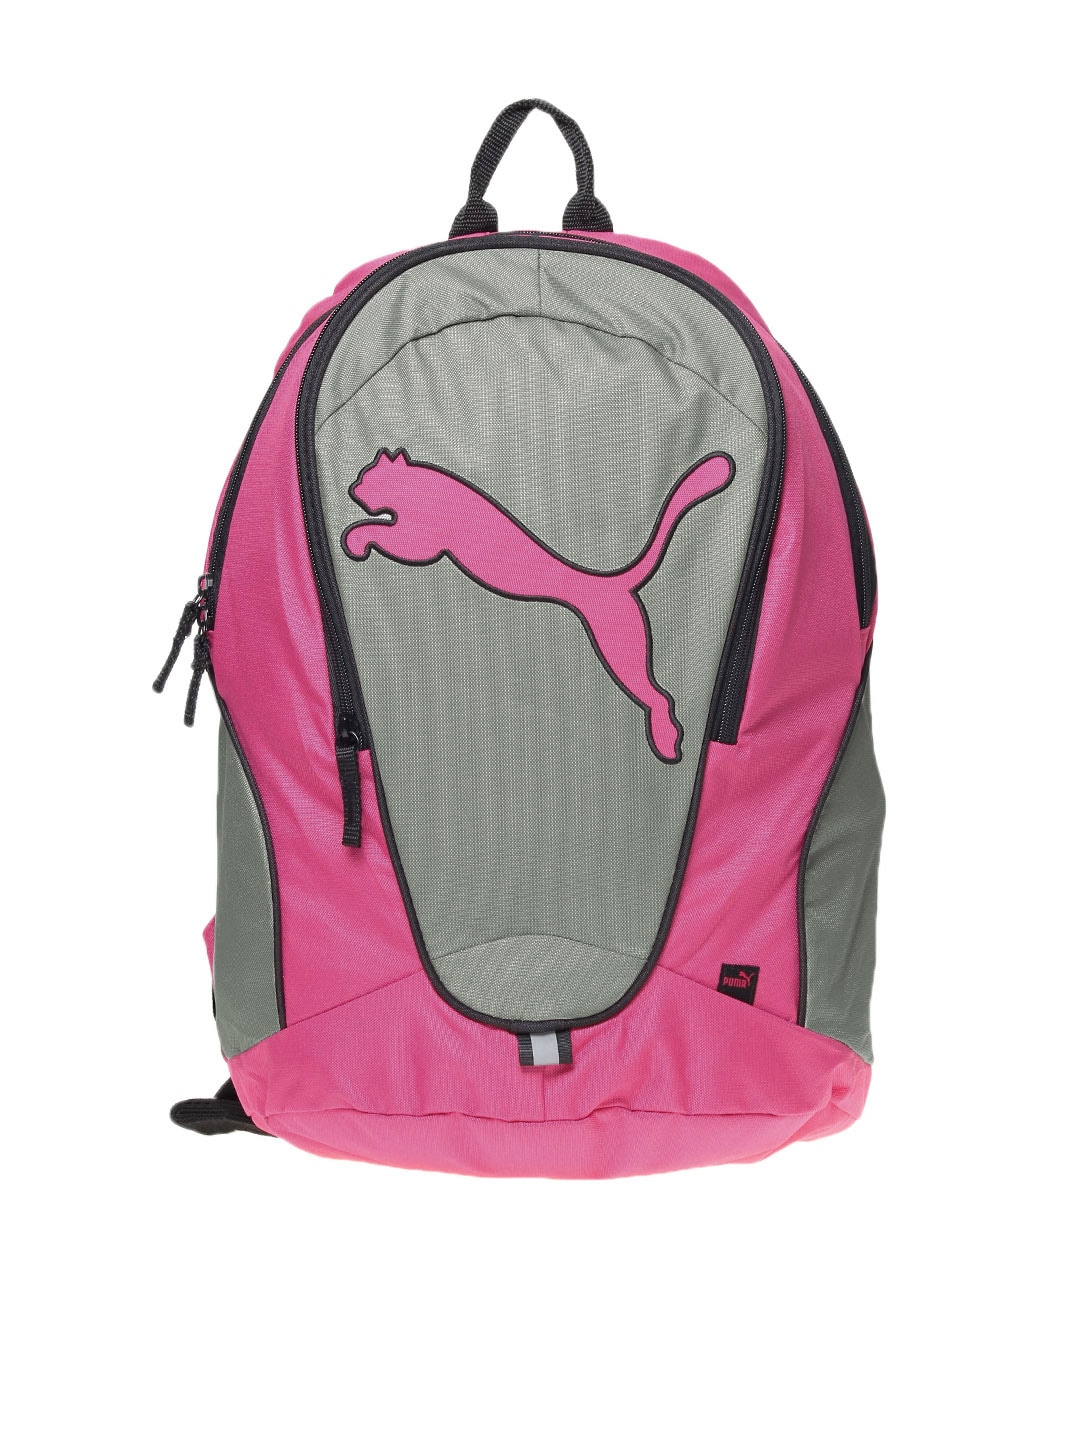 Puma Women Pink & Grey Backpack